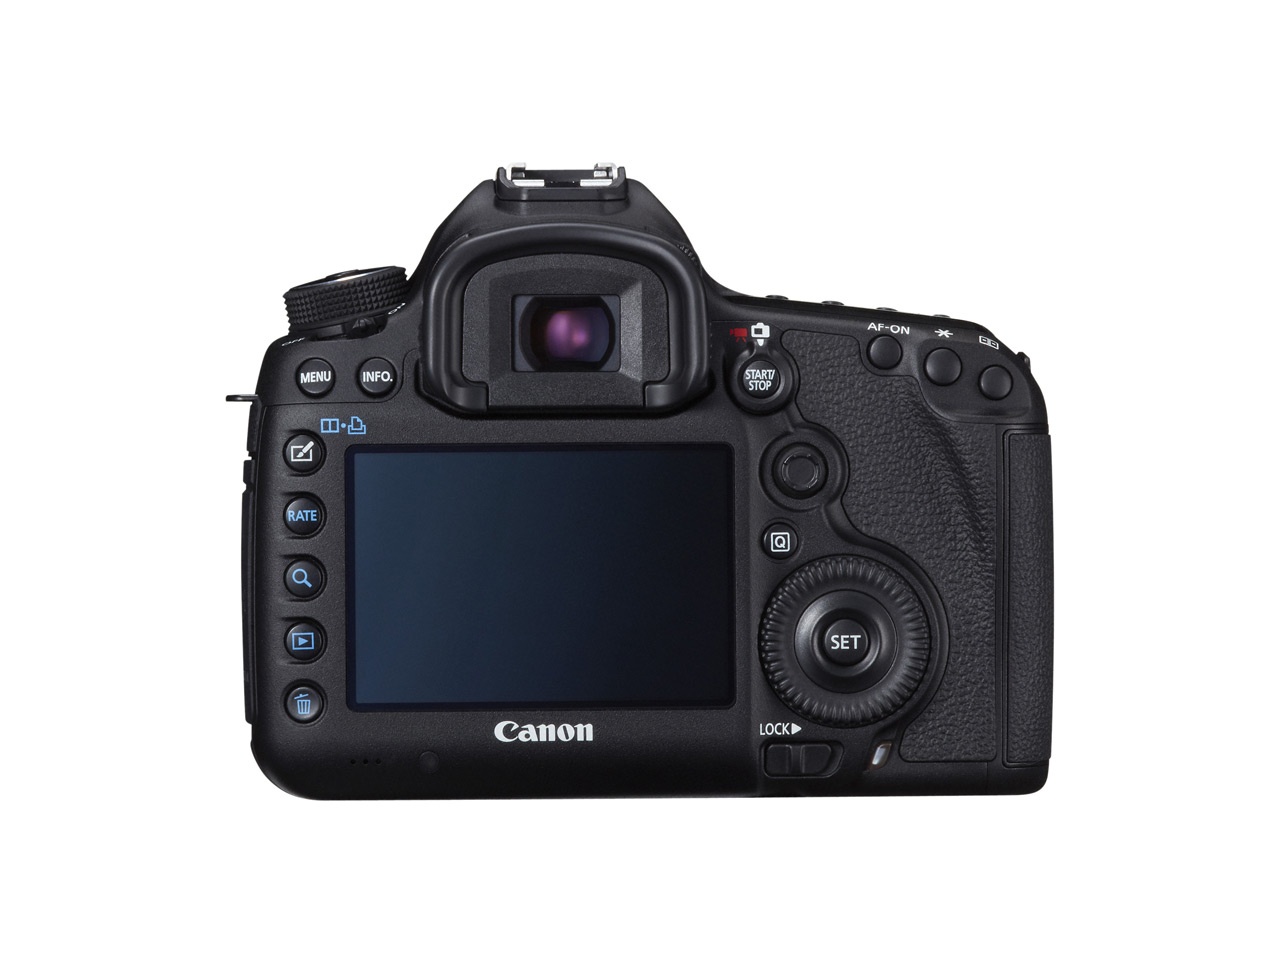 Canon EOS 5D Mark III (вид сзади)